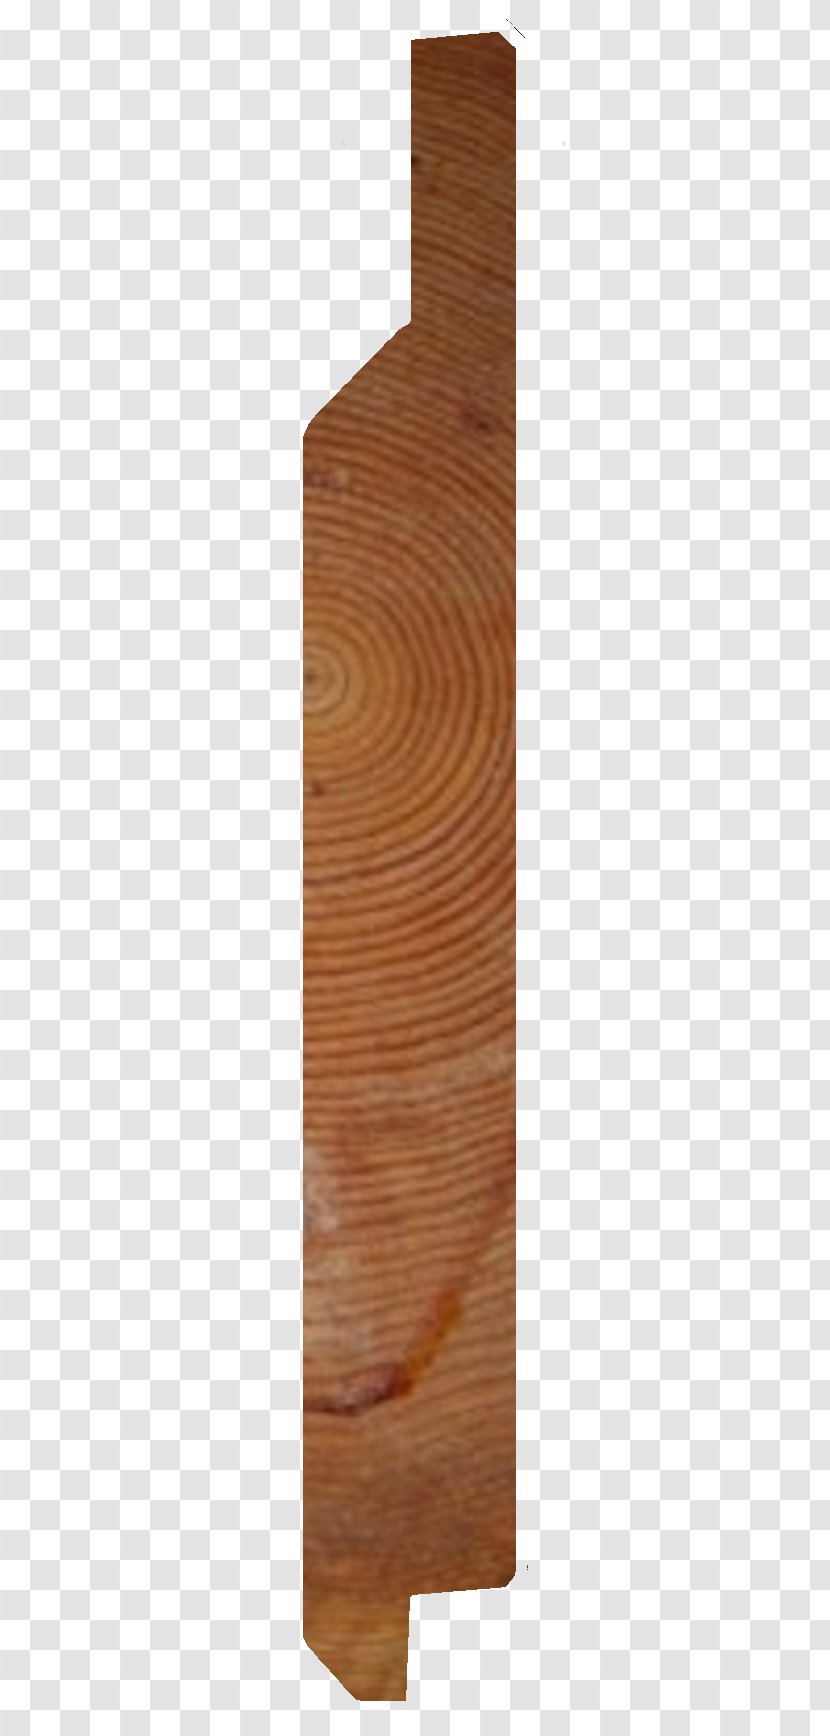 Hardwood Siding Shiplap Plywood Lumber - Wood Flooring - White Plank Transparent PNG